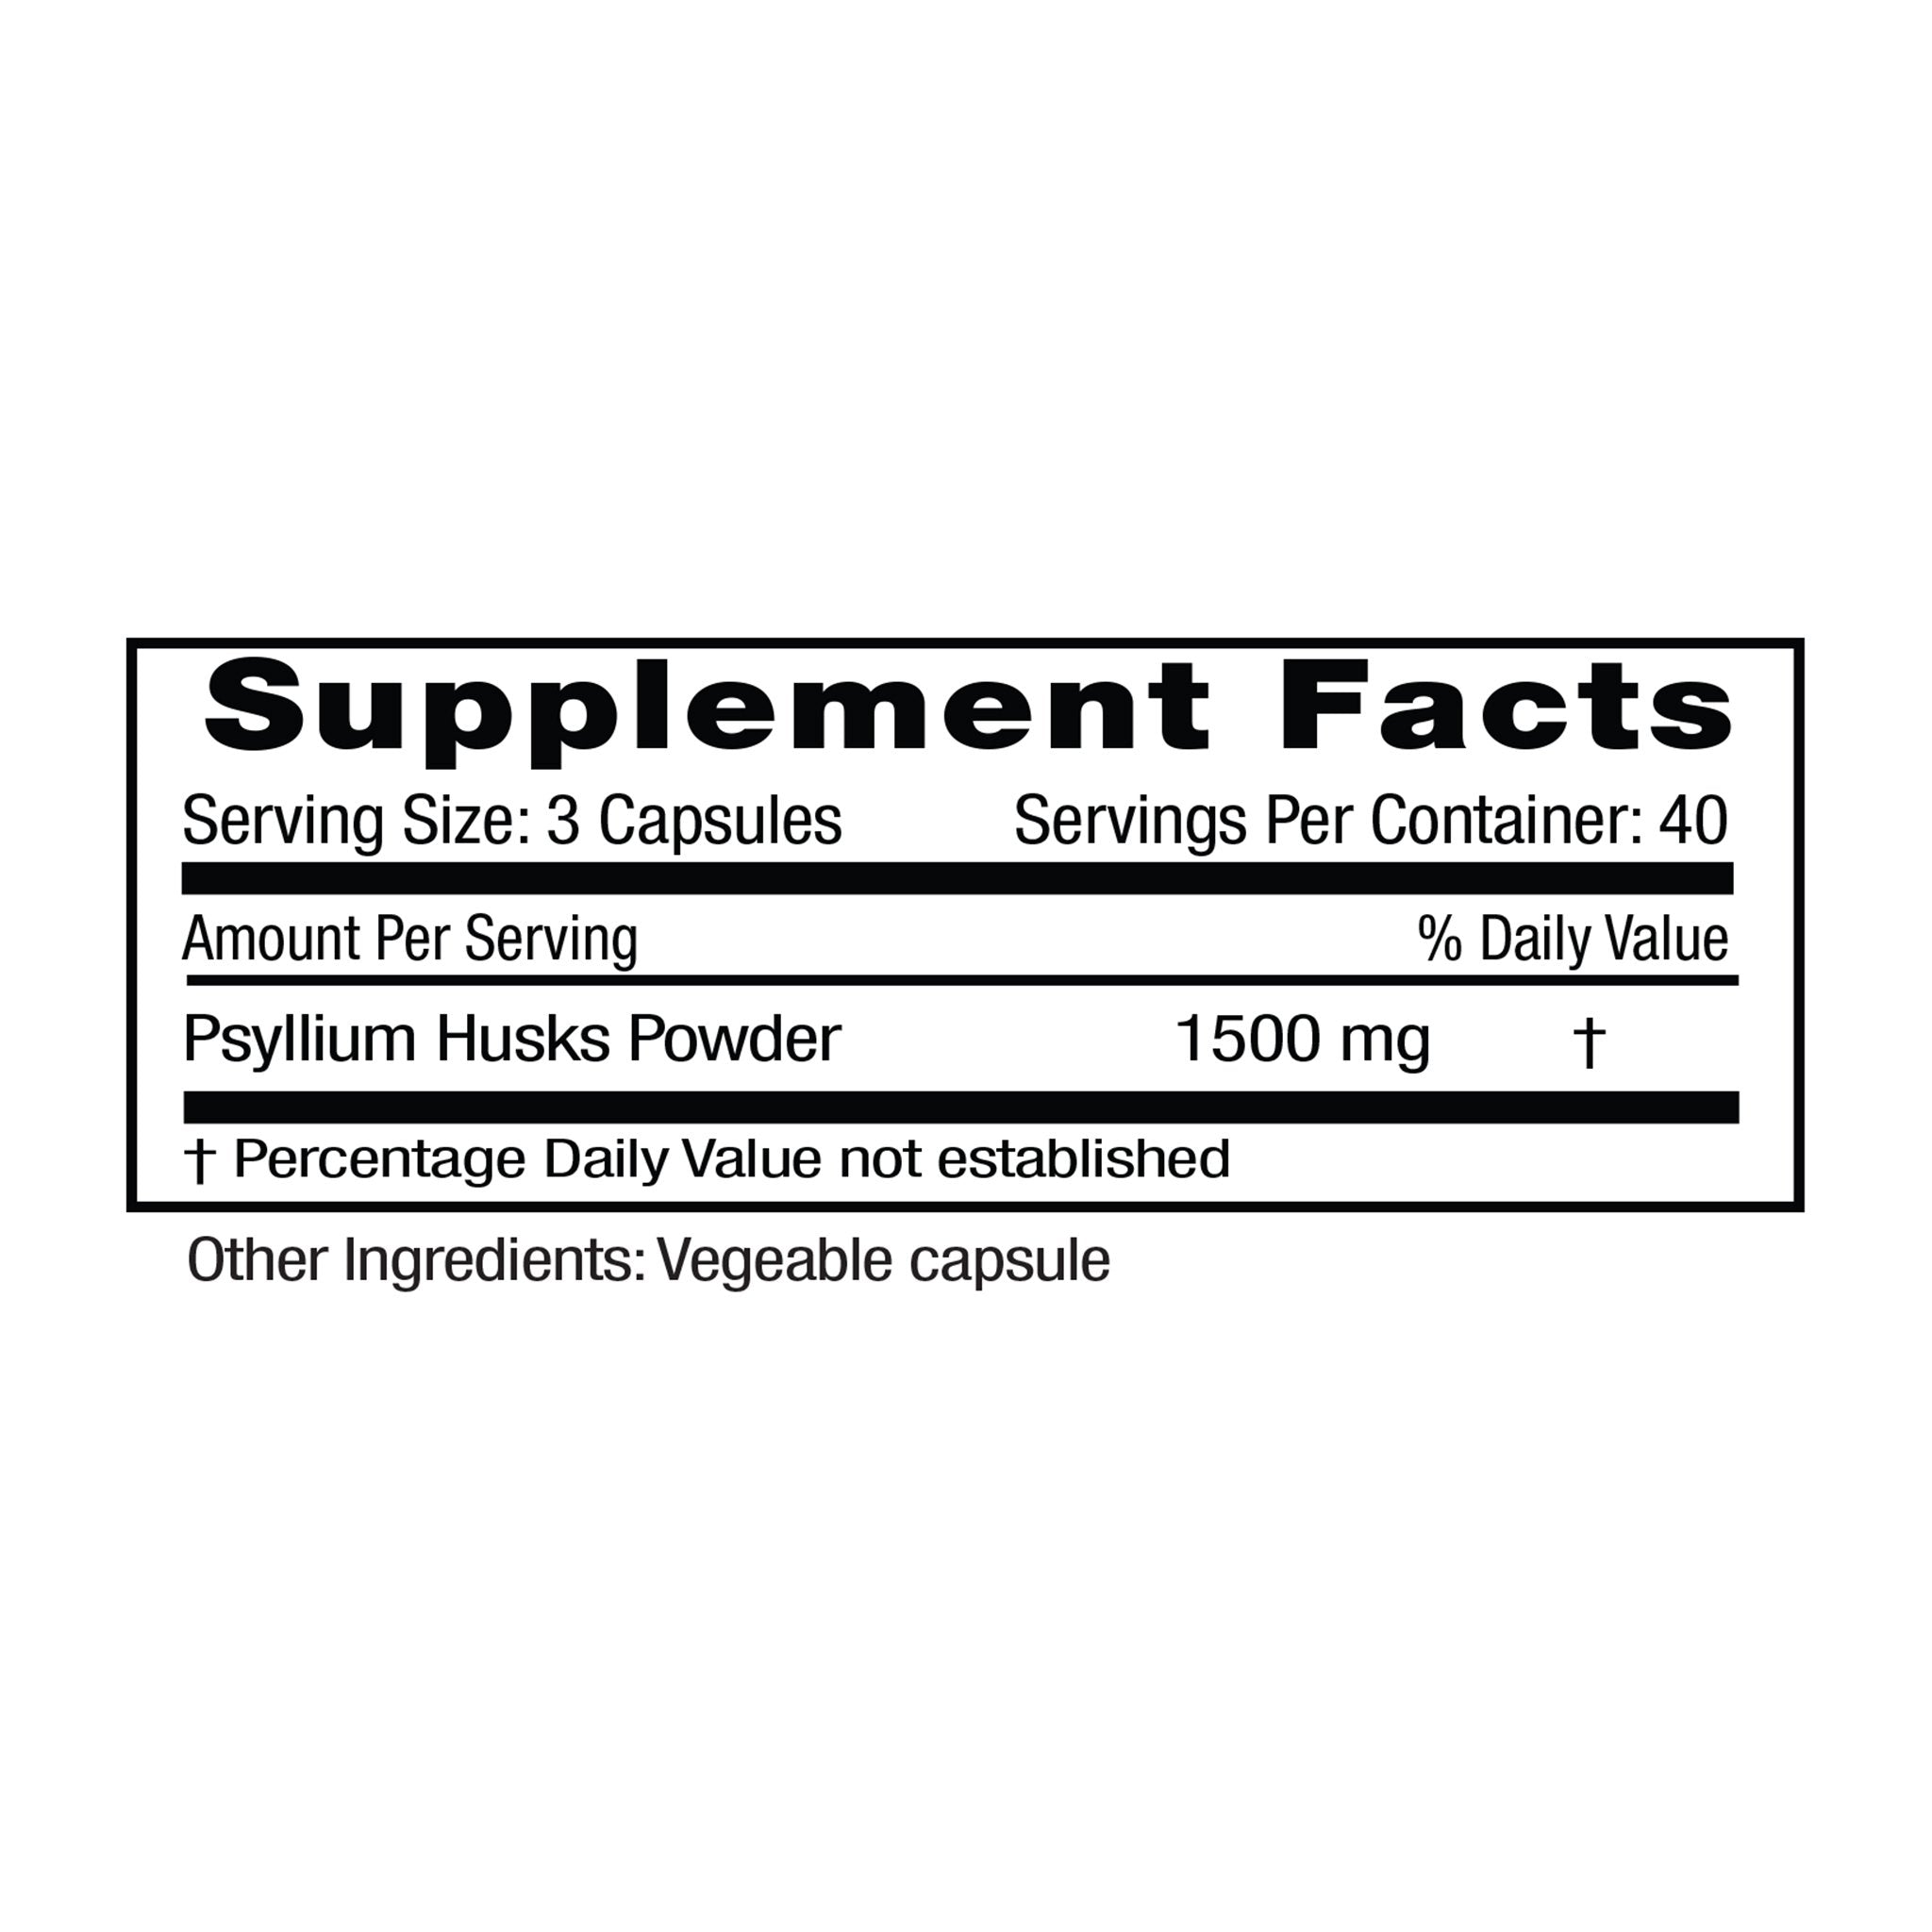 Supplement Facts for Super Psyllium